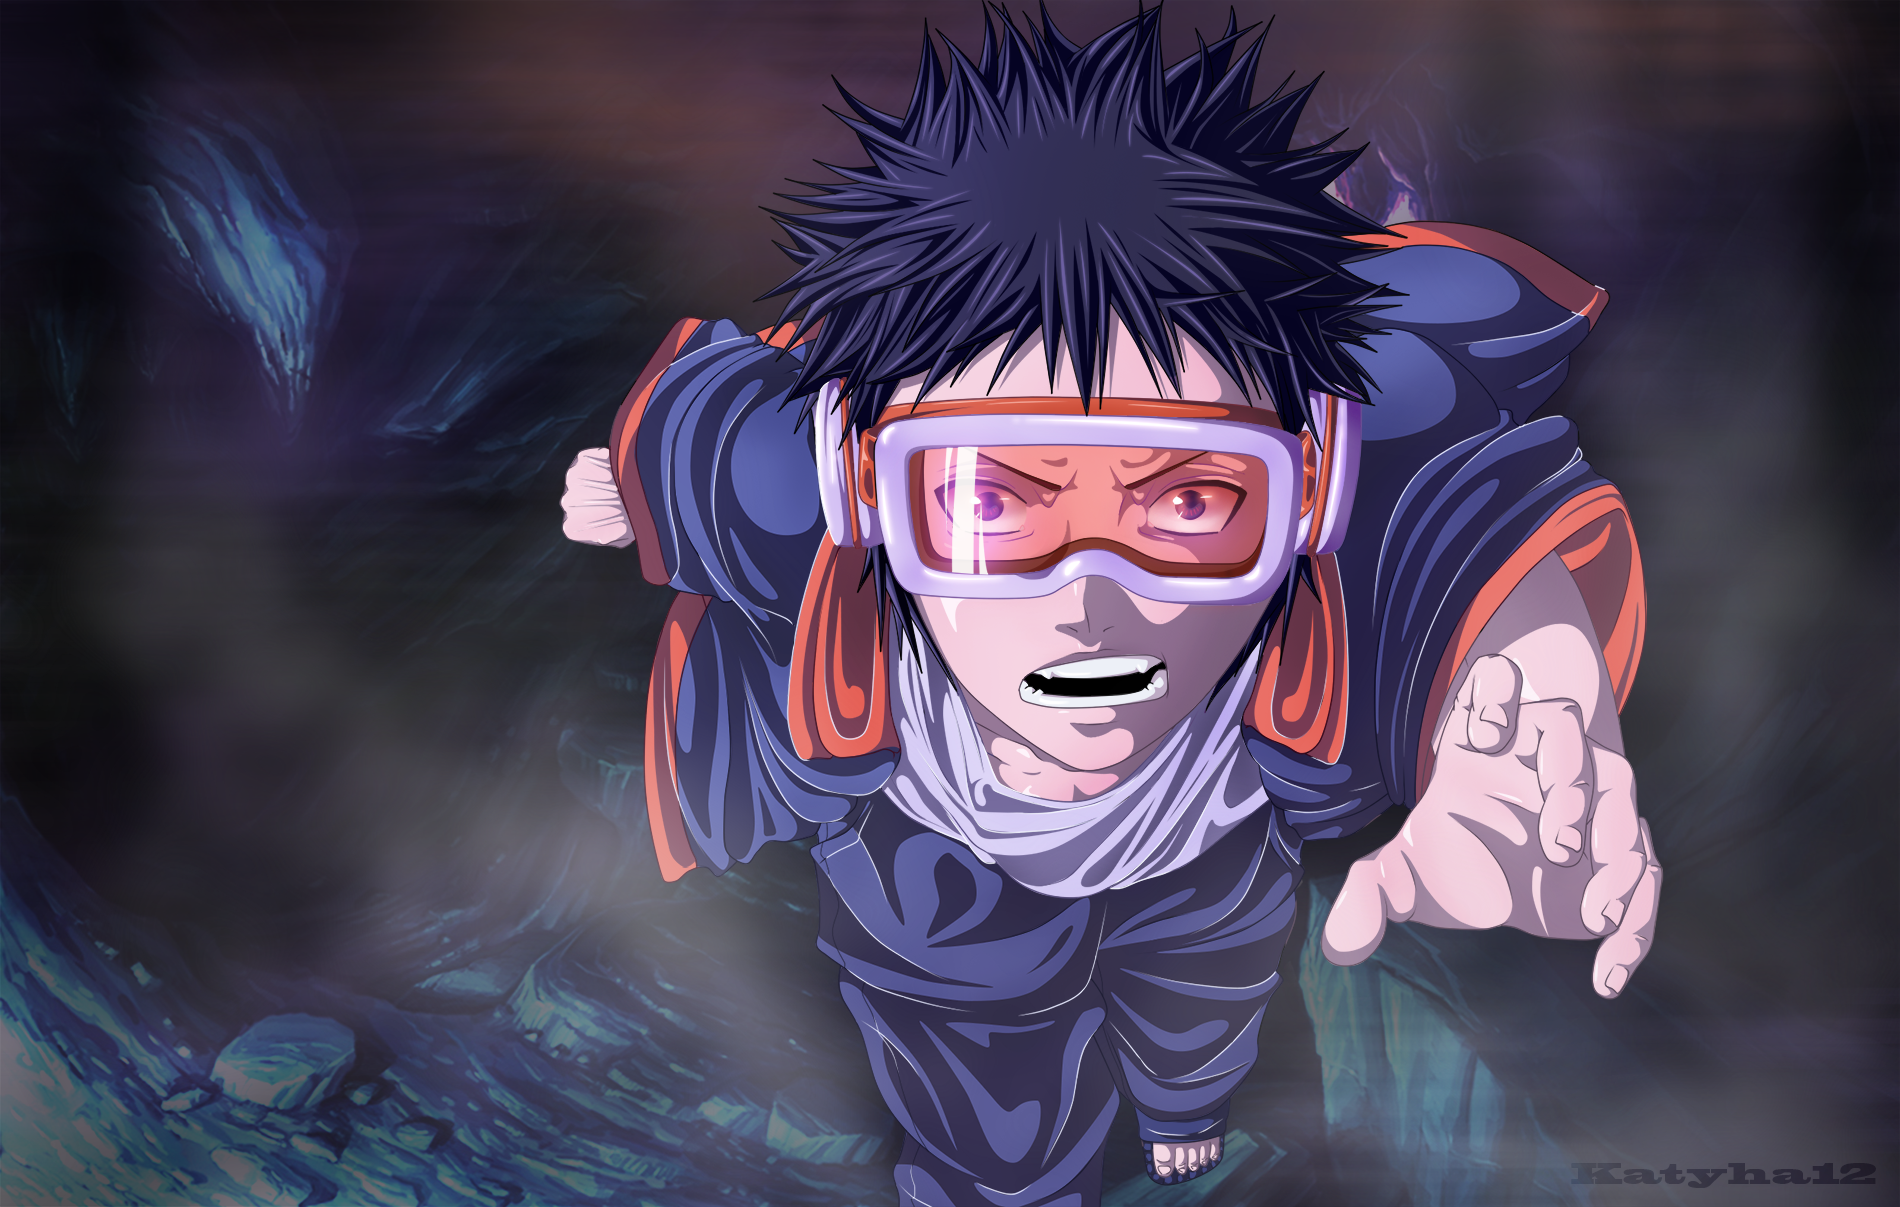 Anime Naruto Obito Uchiha Image. 